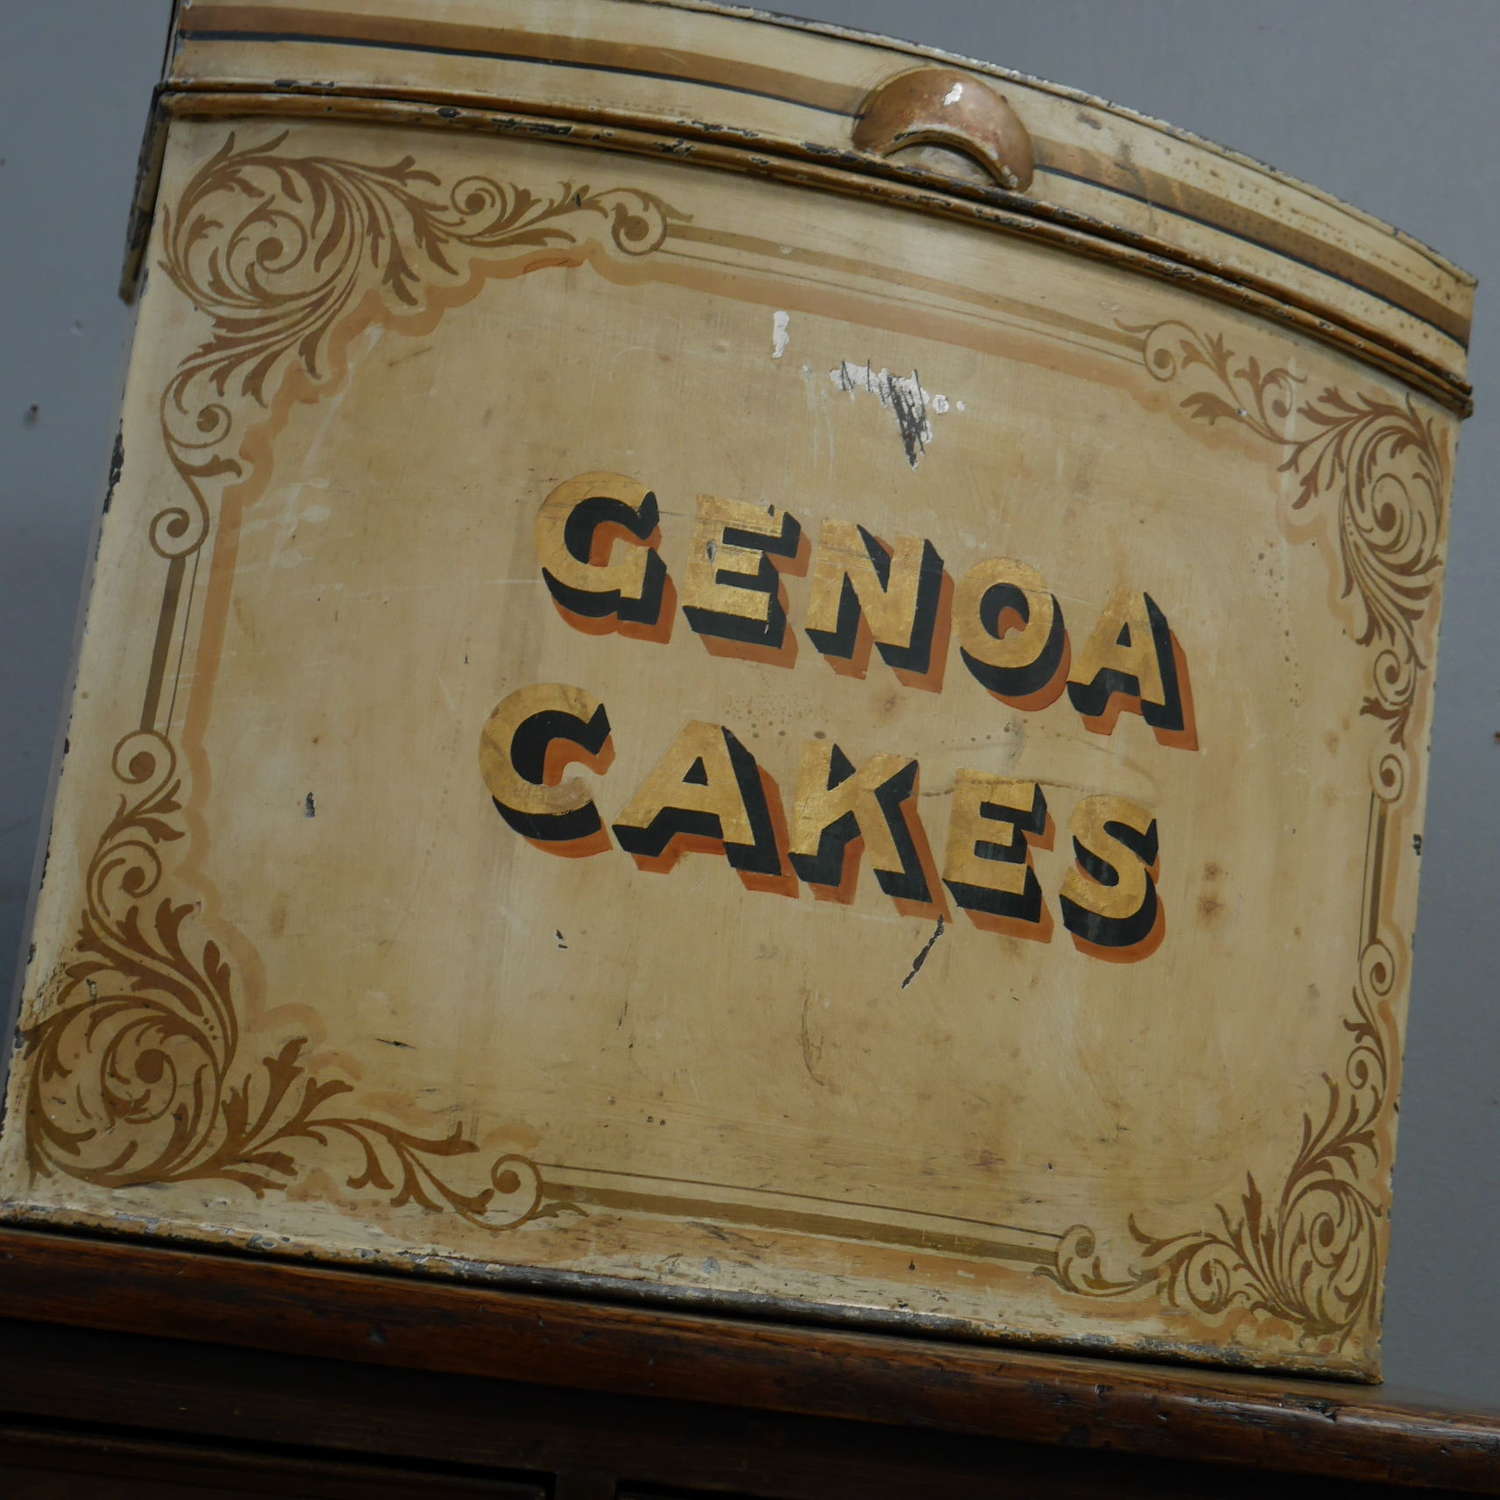 Grocers Tole Genoa Cakes Tin c1890